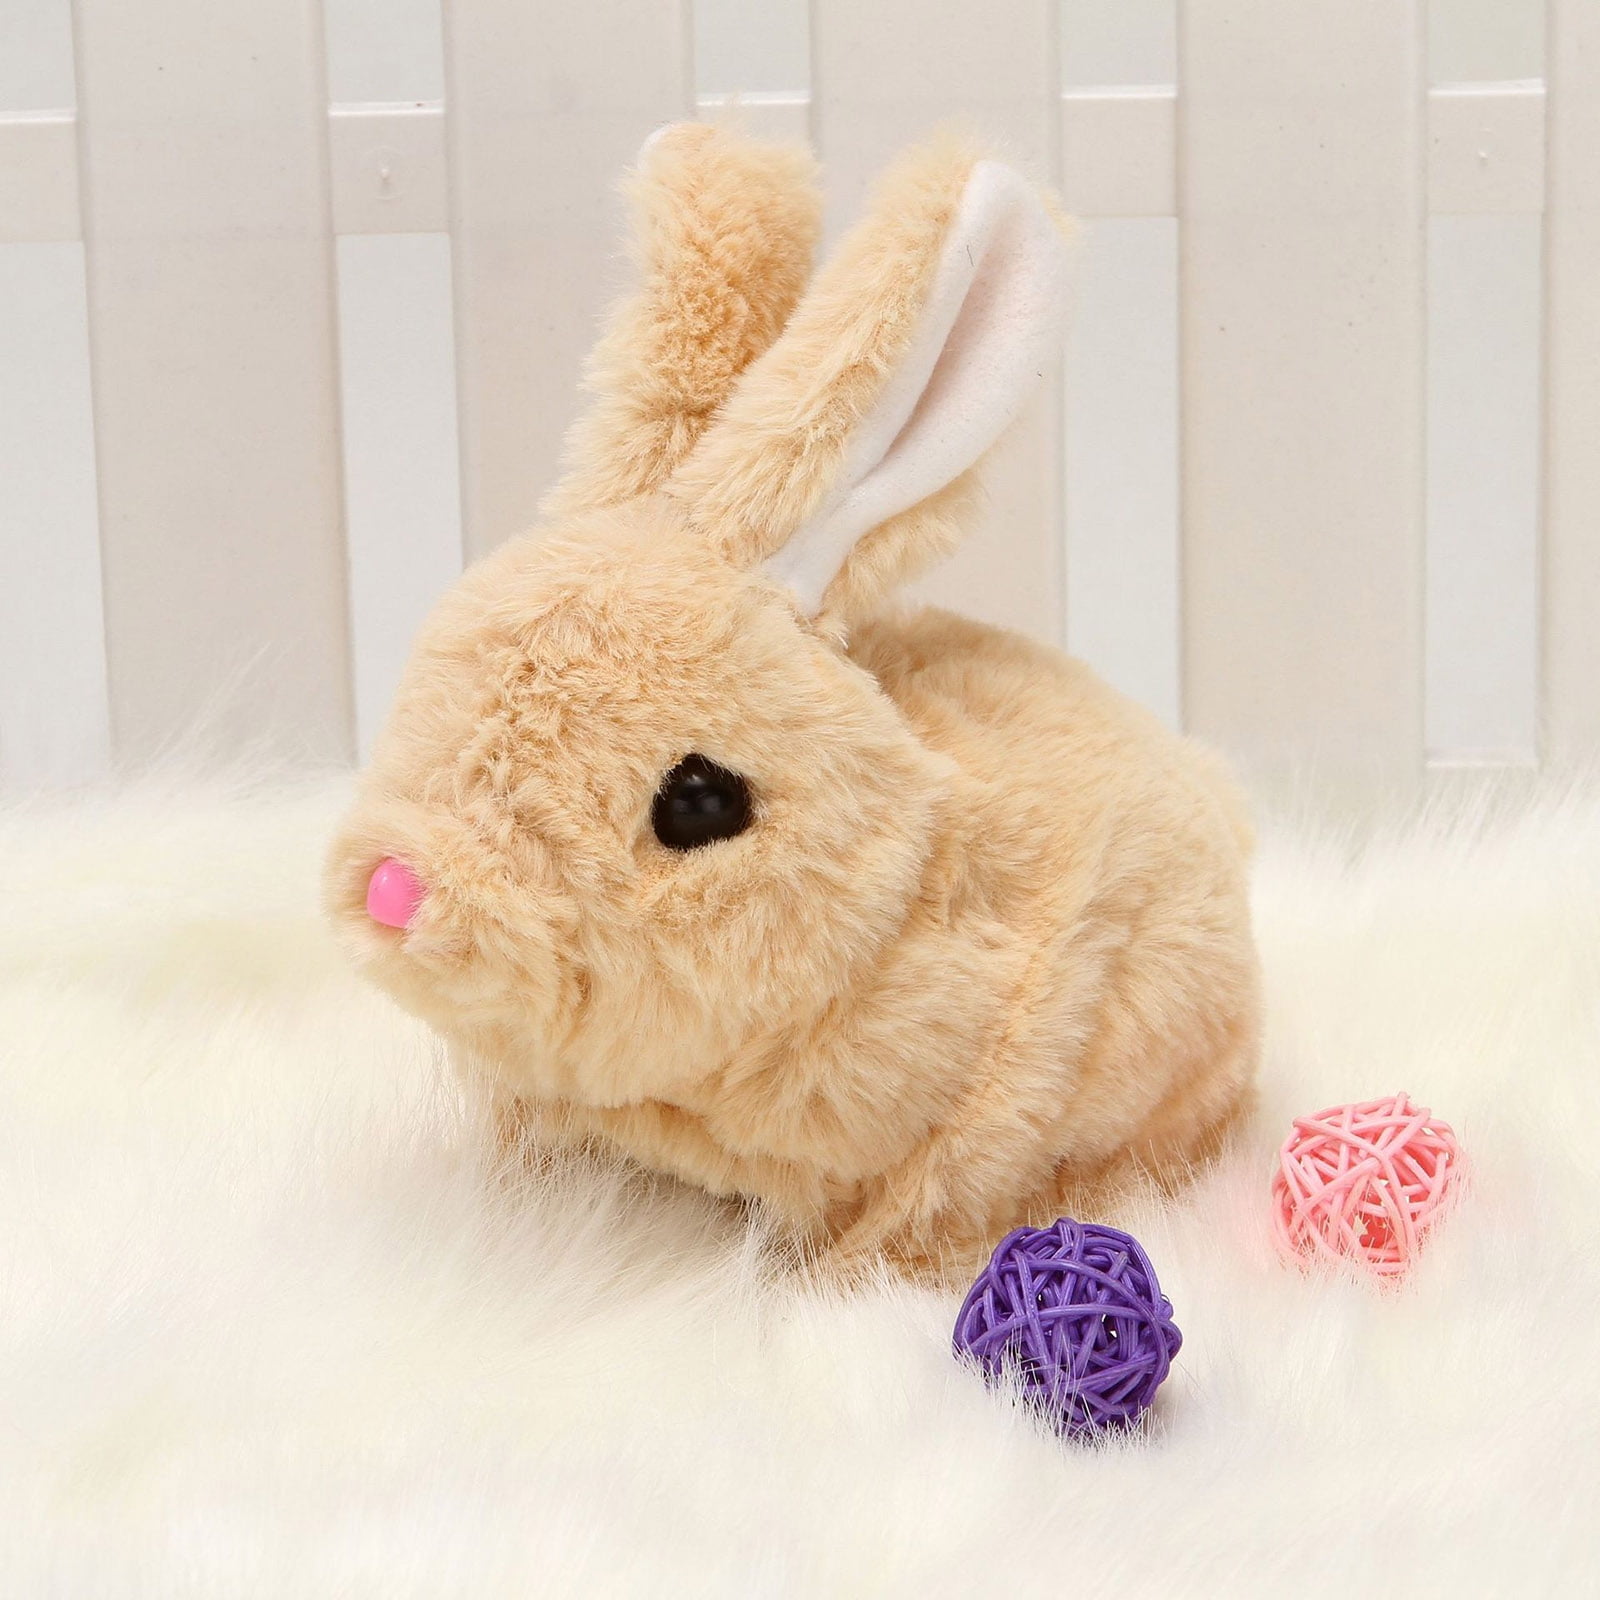 Lifelike Simulation Rabbit Stuffed Bunny Toy for Kids Gift Home Decor 17cm 